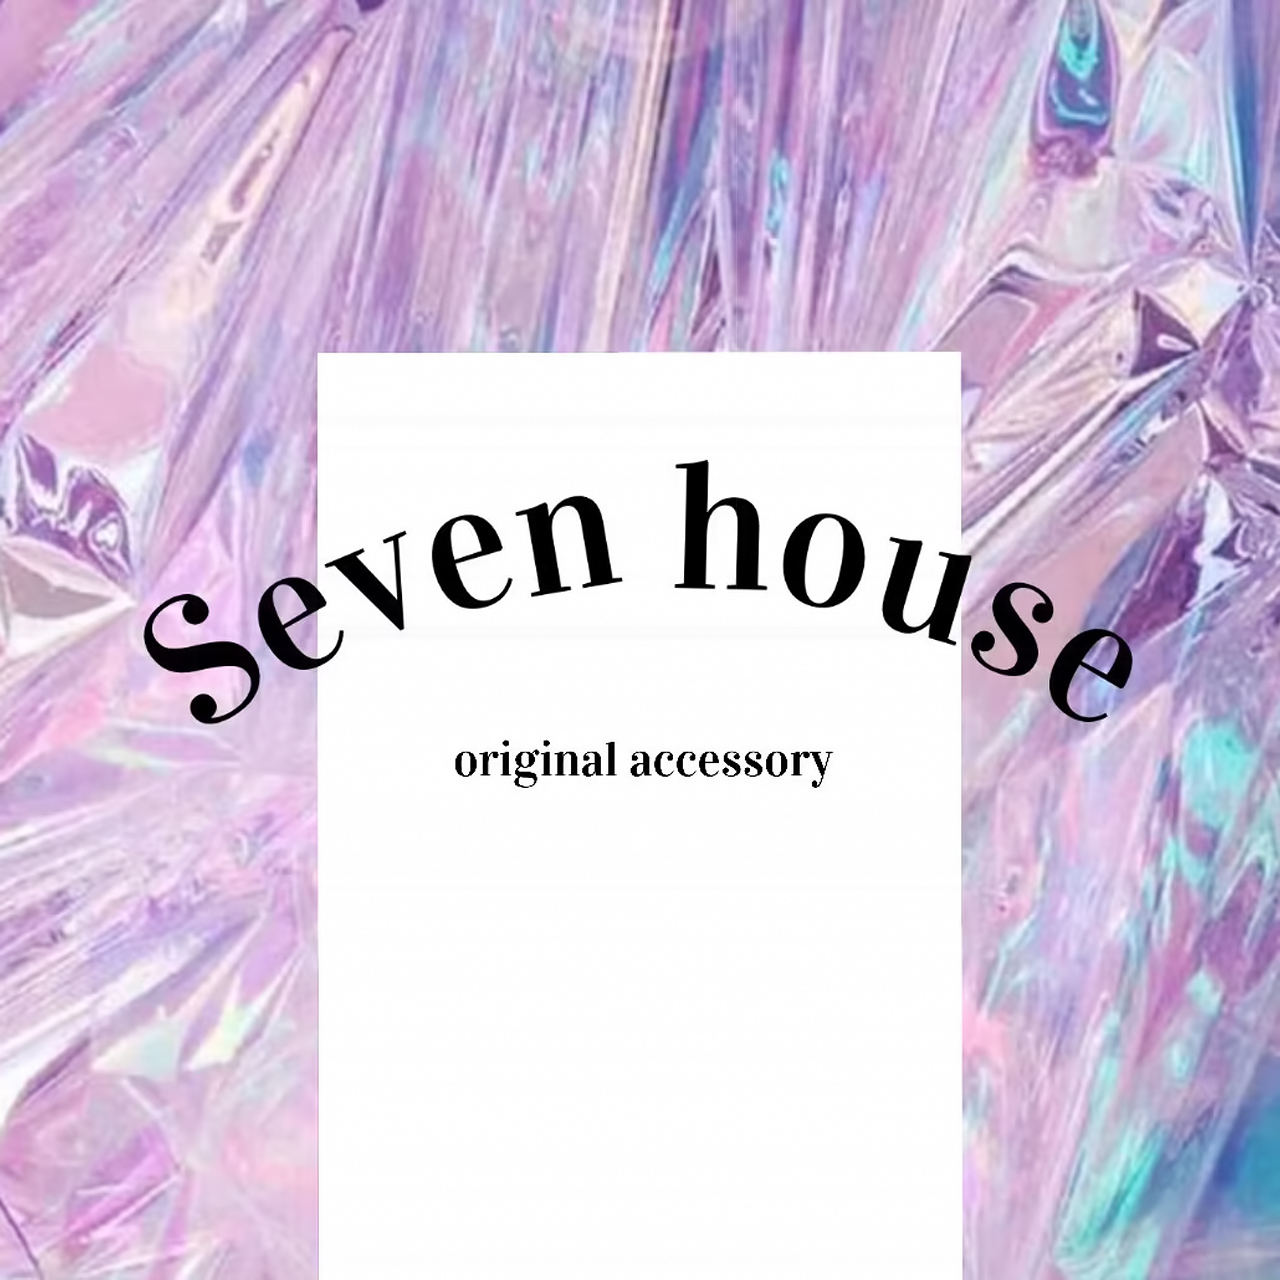 Seven house - セブンハウス